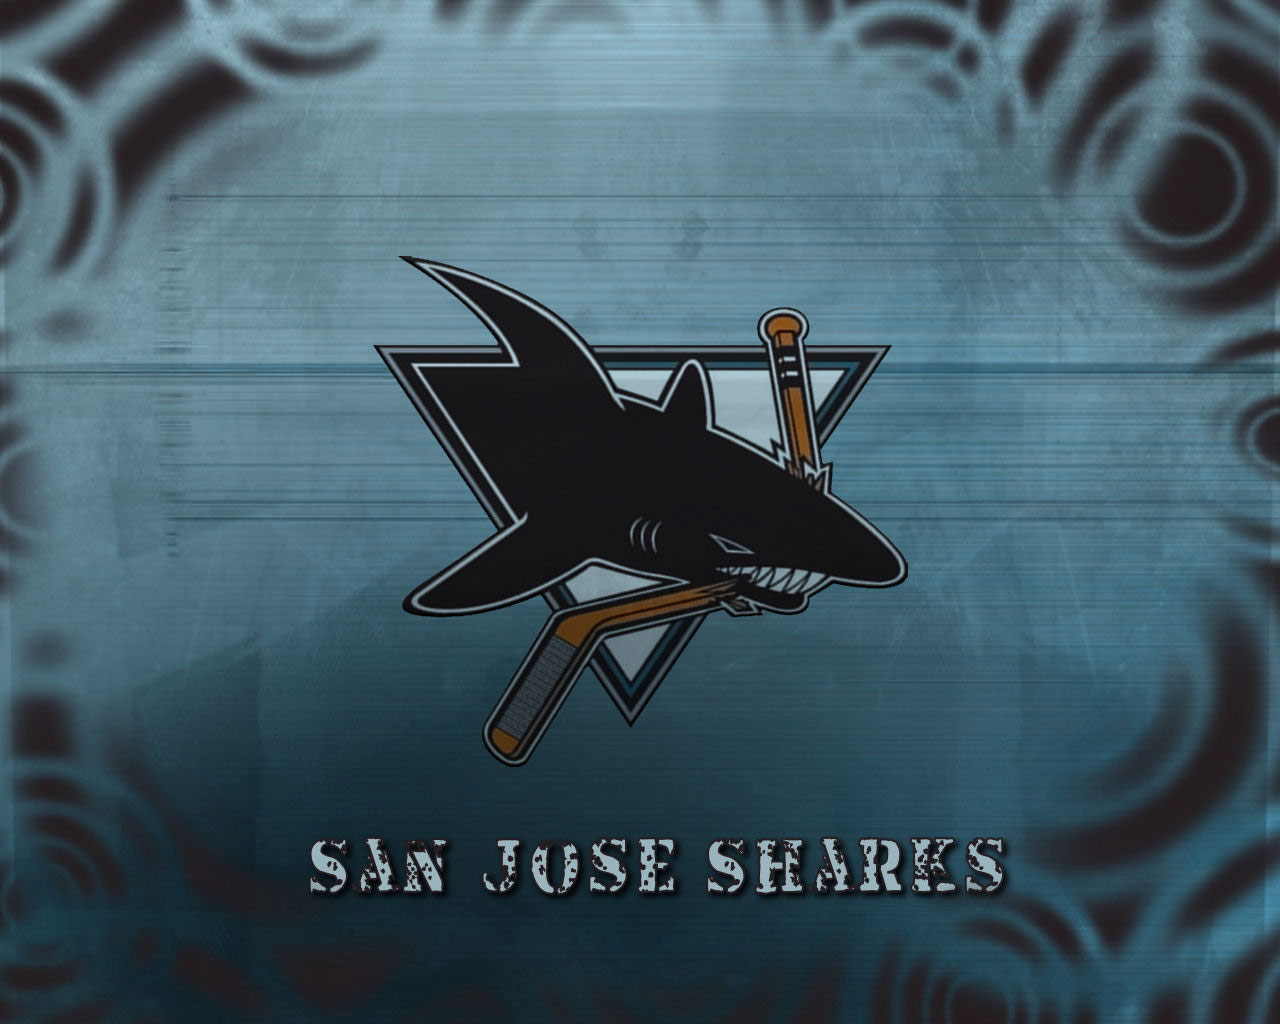 san jose sharks iphone wallpaper,airplane,aircraft,font,vehicle,illustration